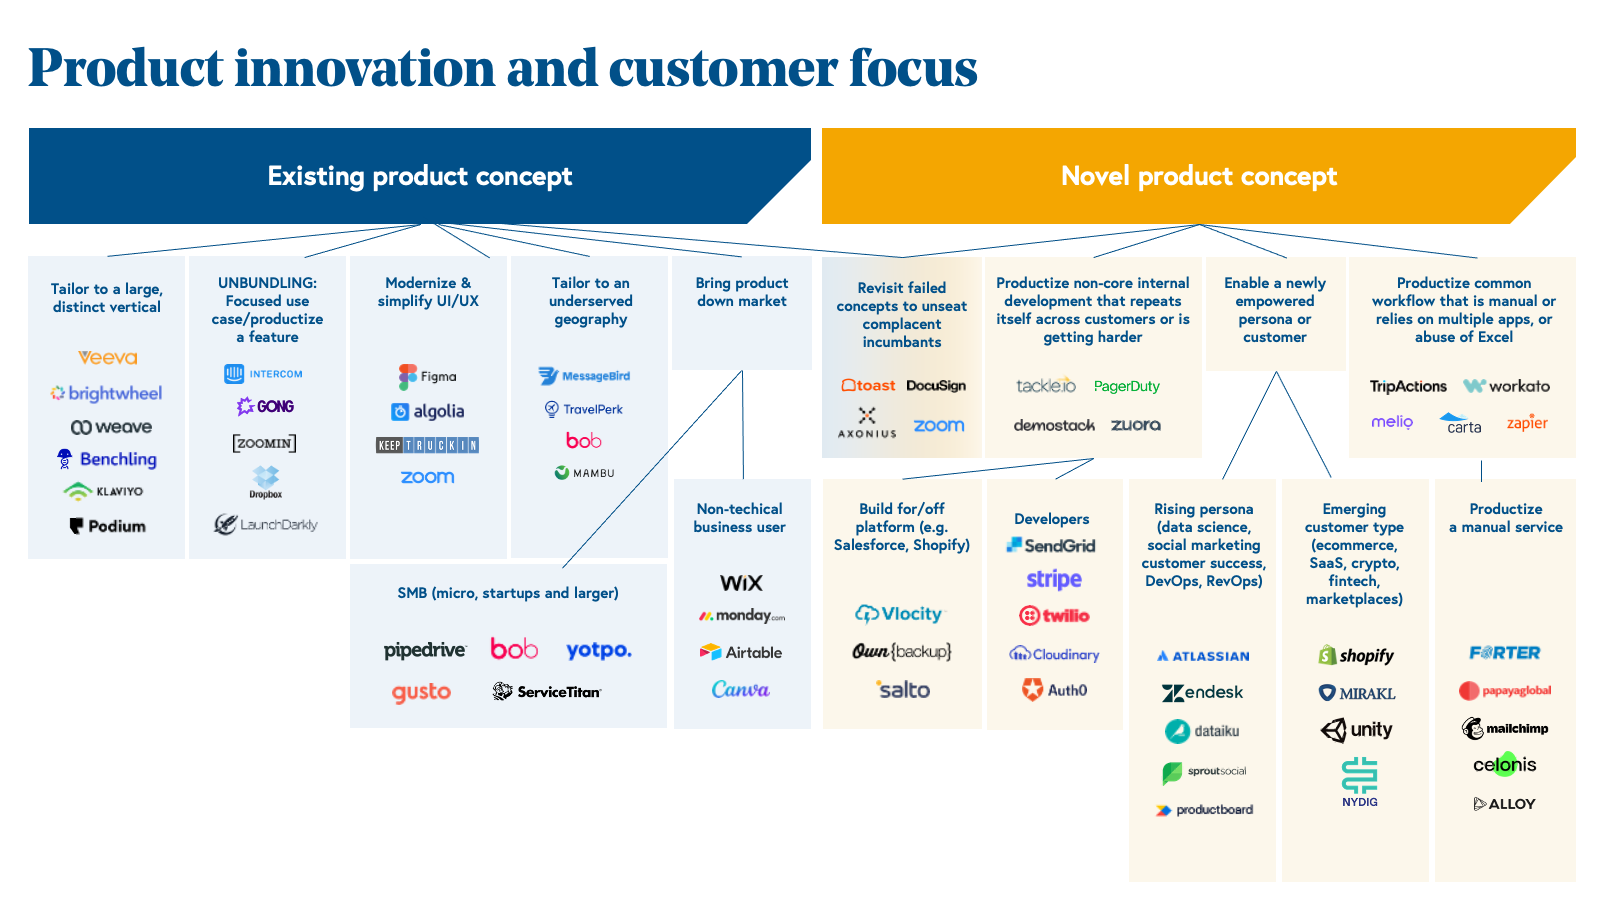 Product innovation and customer focus framework 